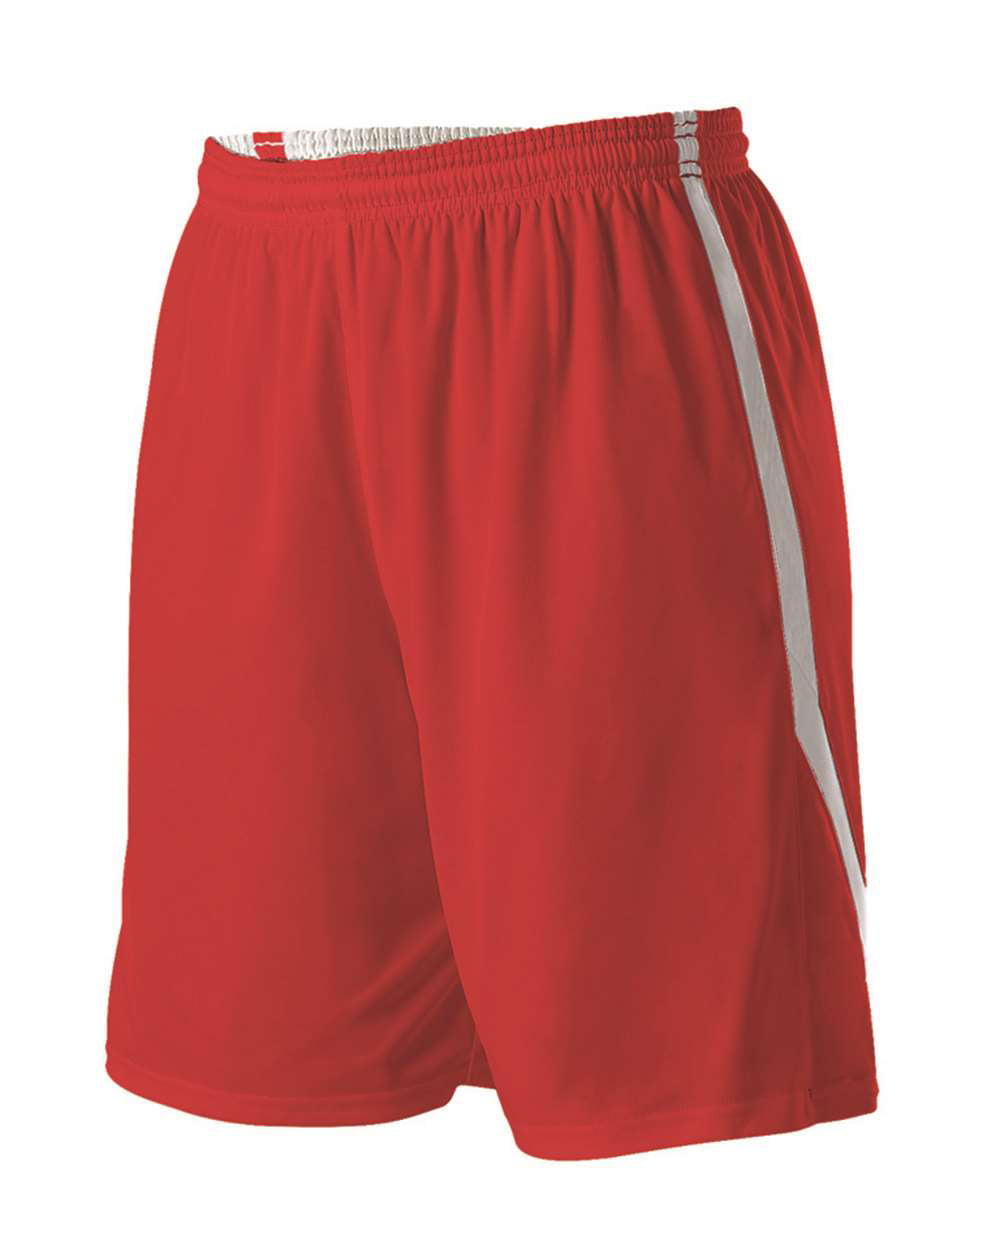 womens red basketball shorts